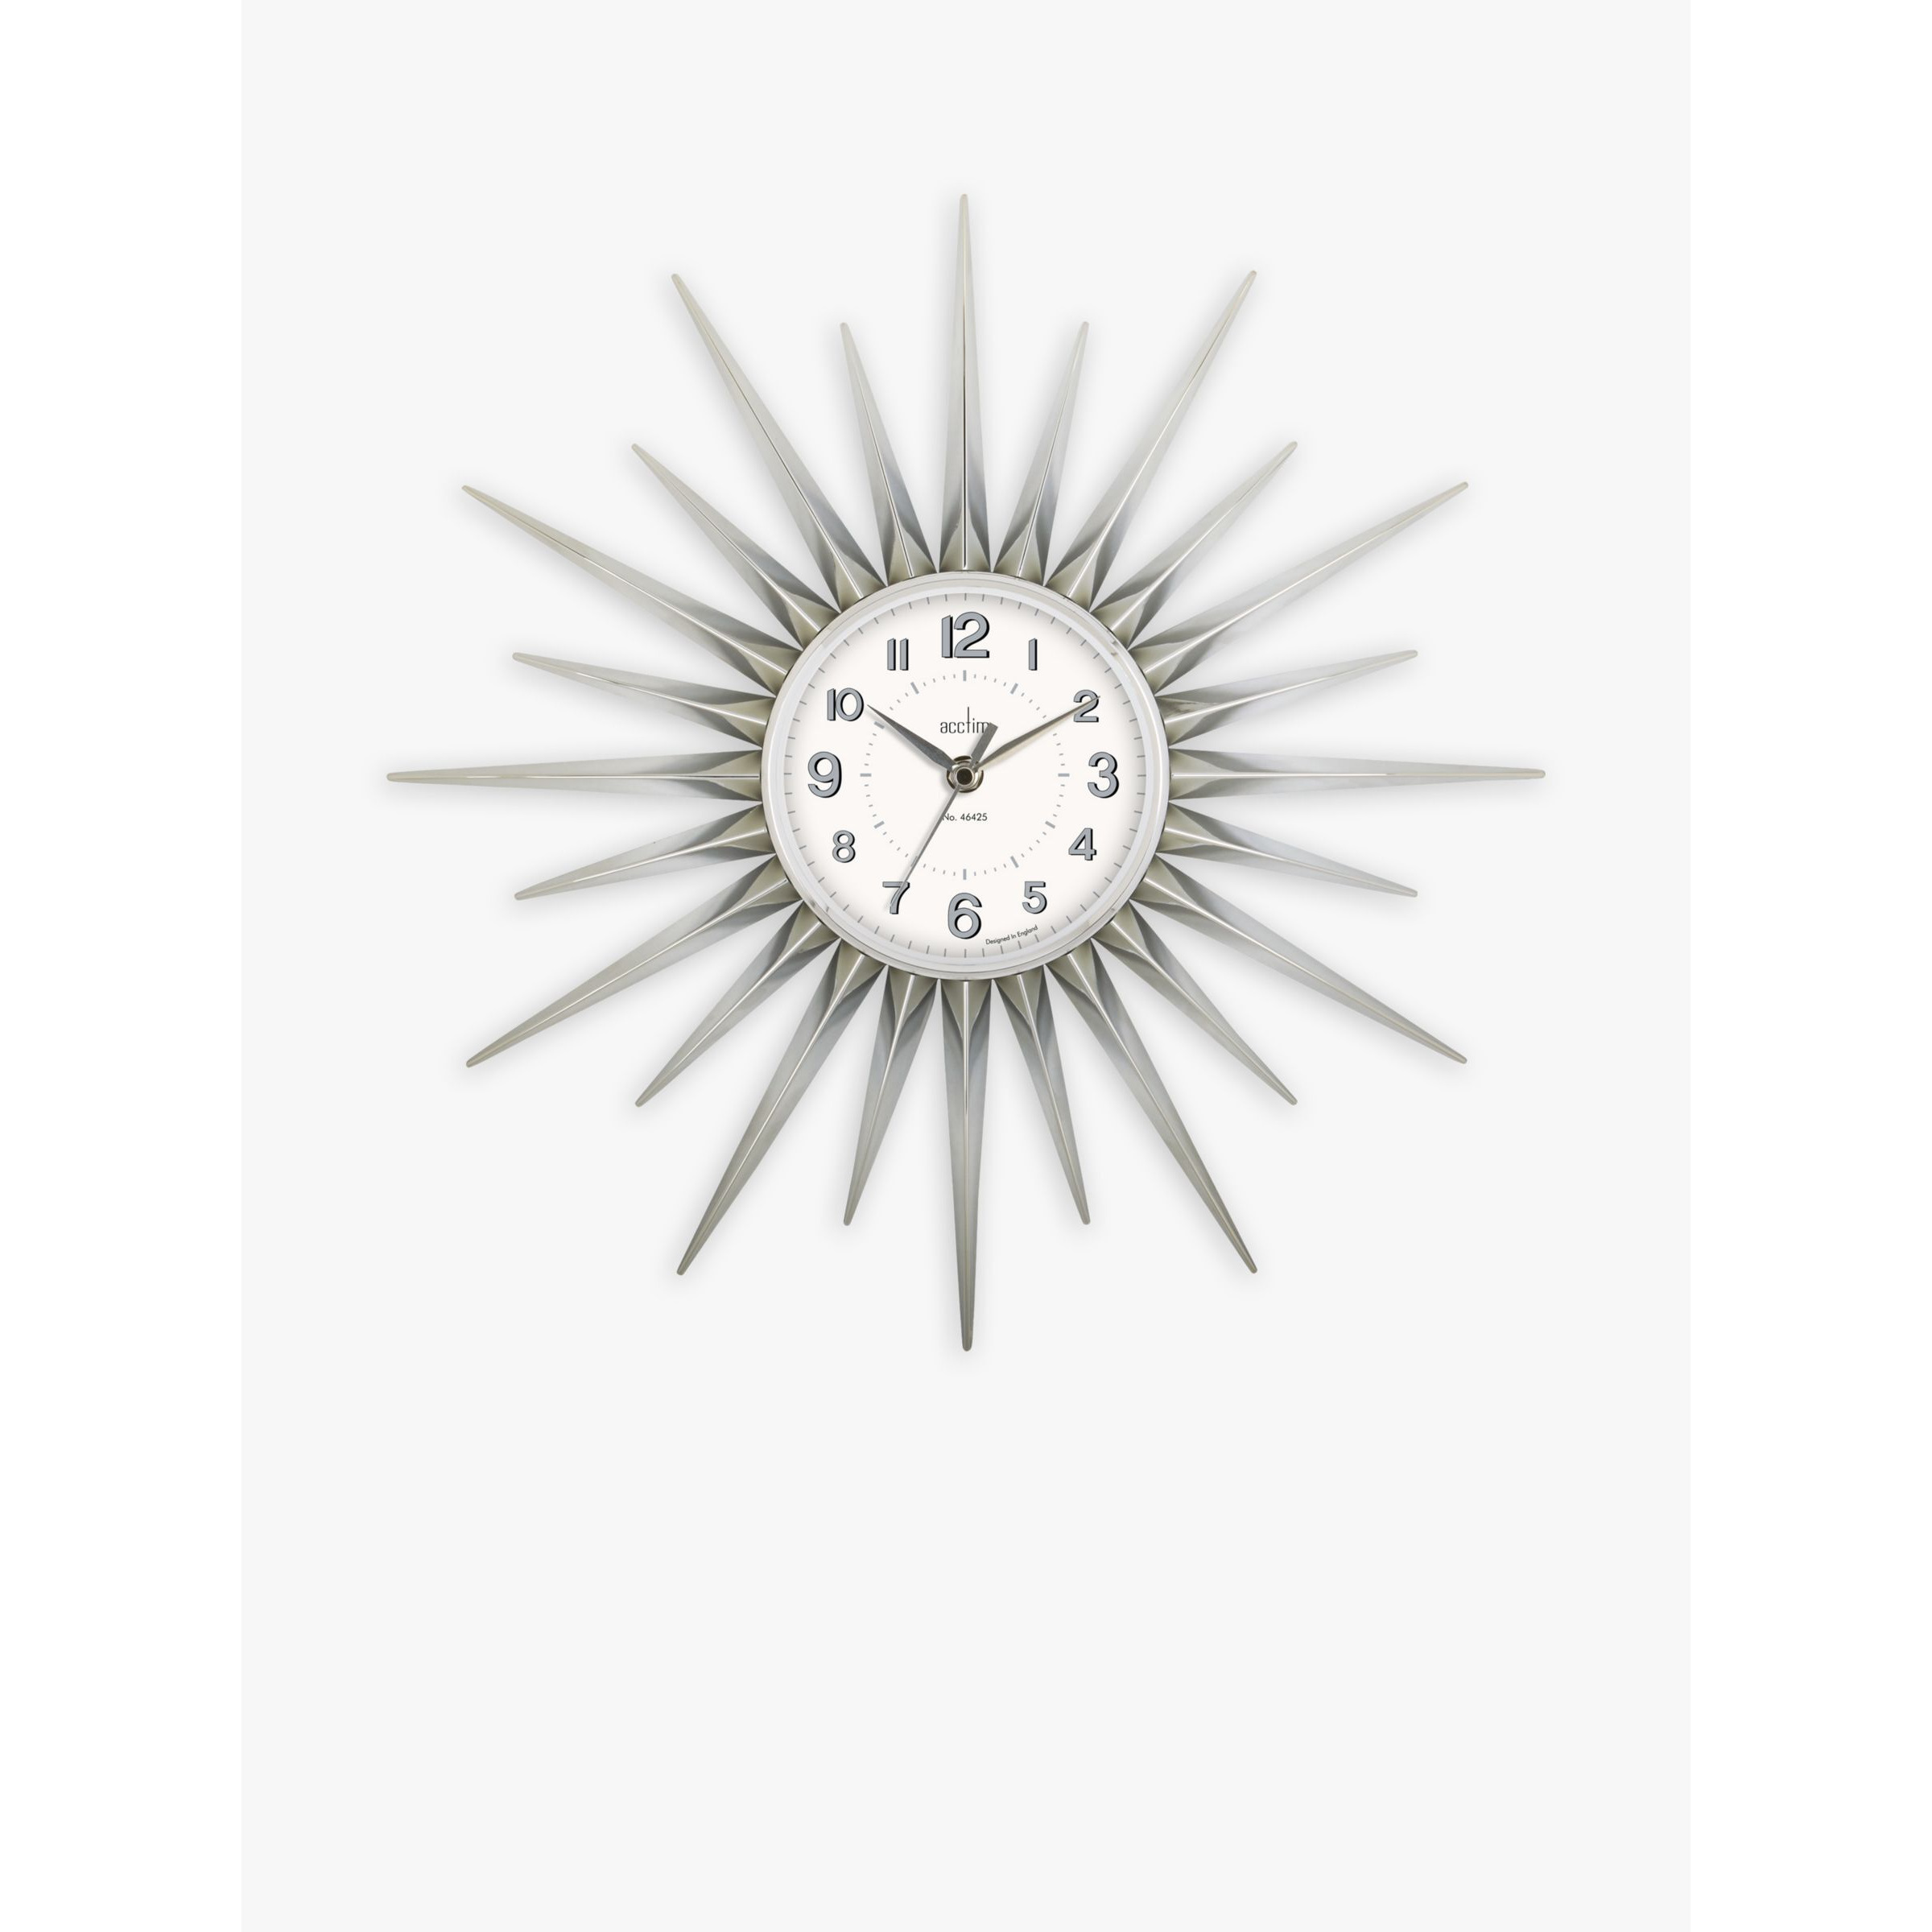 Acctim Stella Spokes Analogue Quartz Wall Clock, 44cm, Chrome - image 1